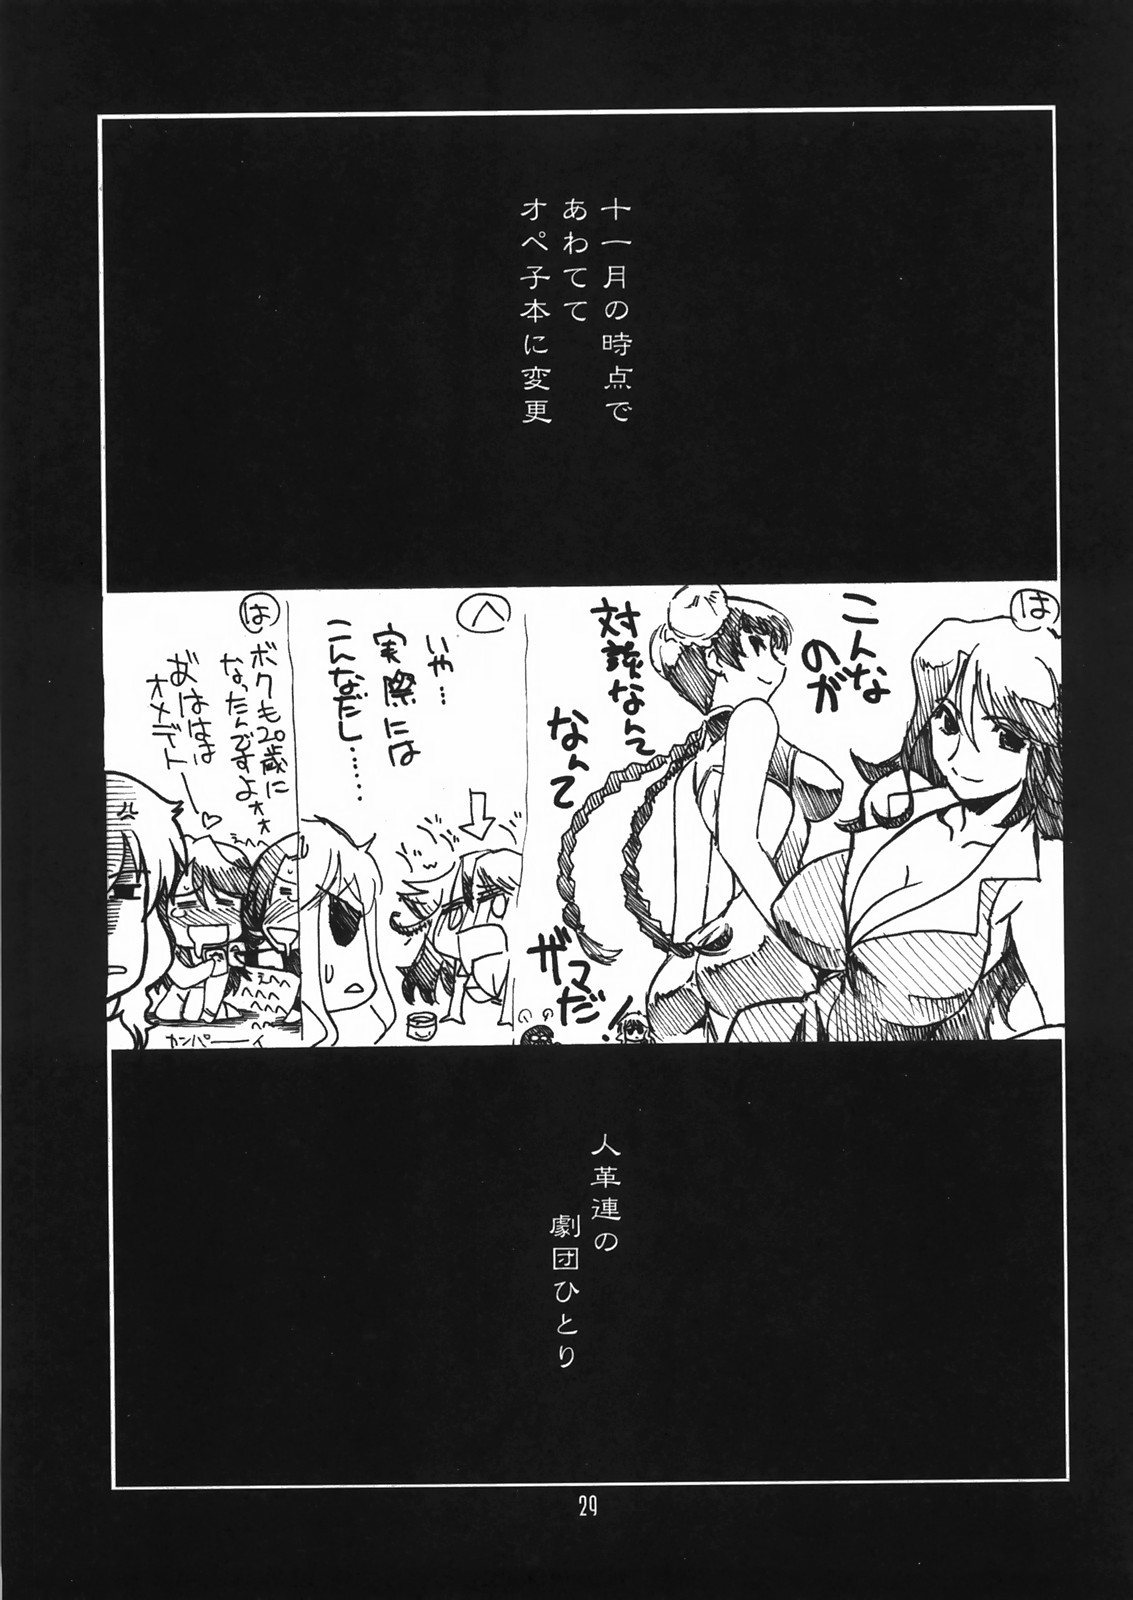 Ruridou Gahou 34 queens blade 27 hentai manga